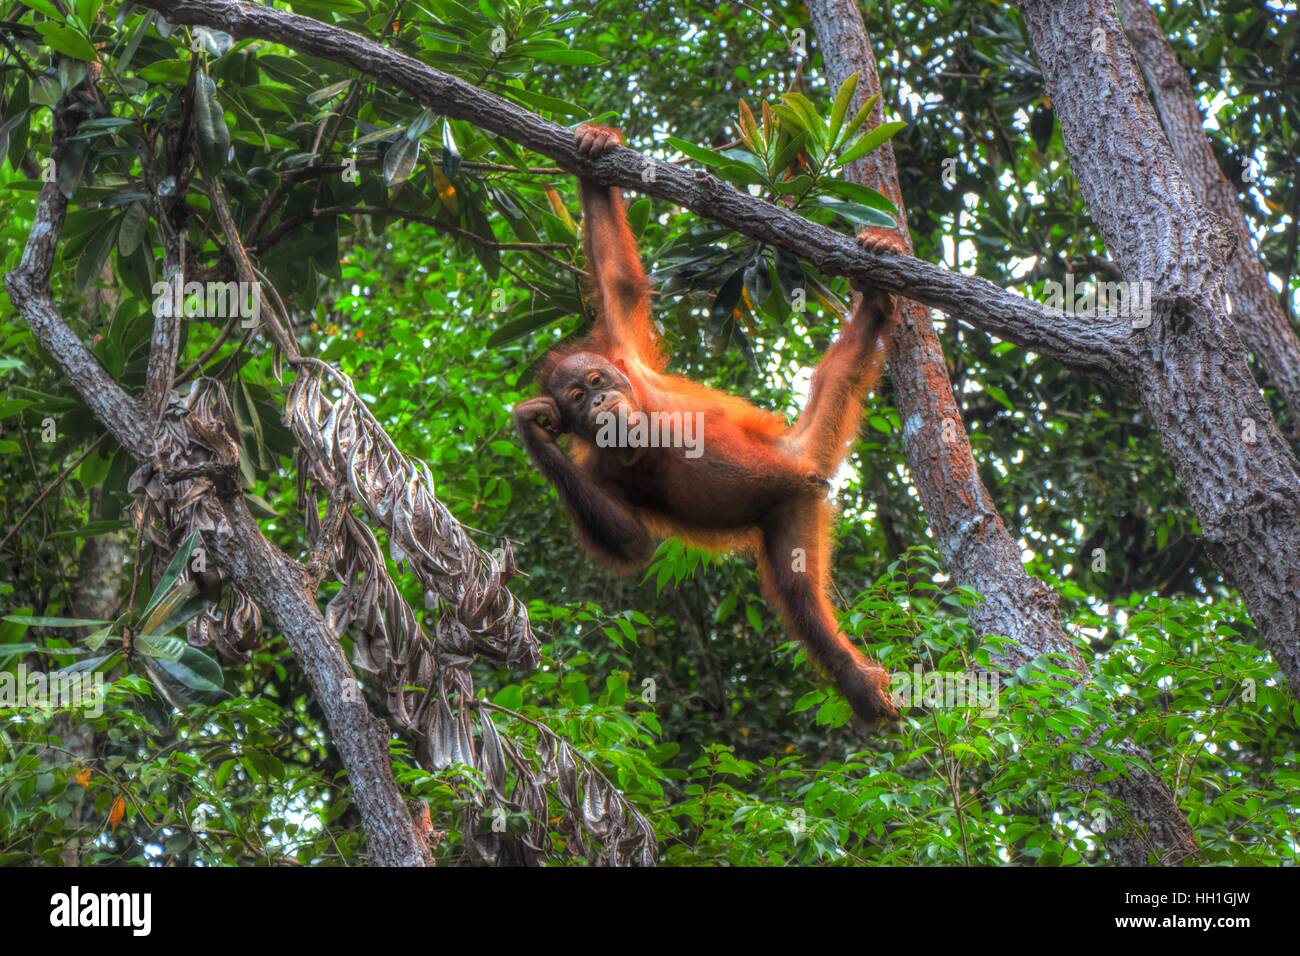 An orangutang swinging from a tree at the Sepilok Rehabilitation Centre in Sabah, Malaysia. Stock Photo